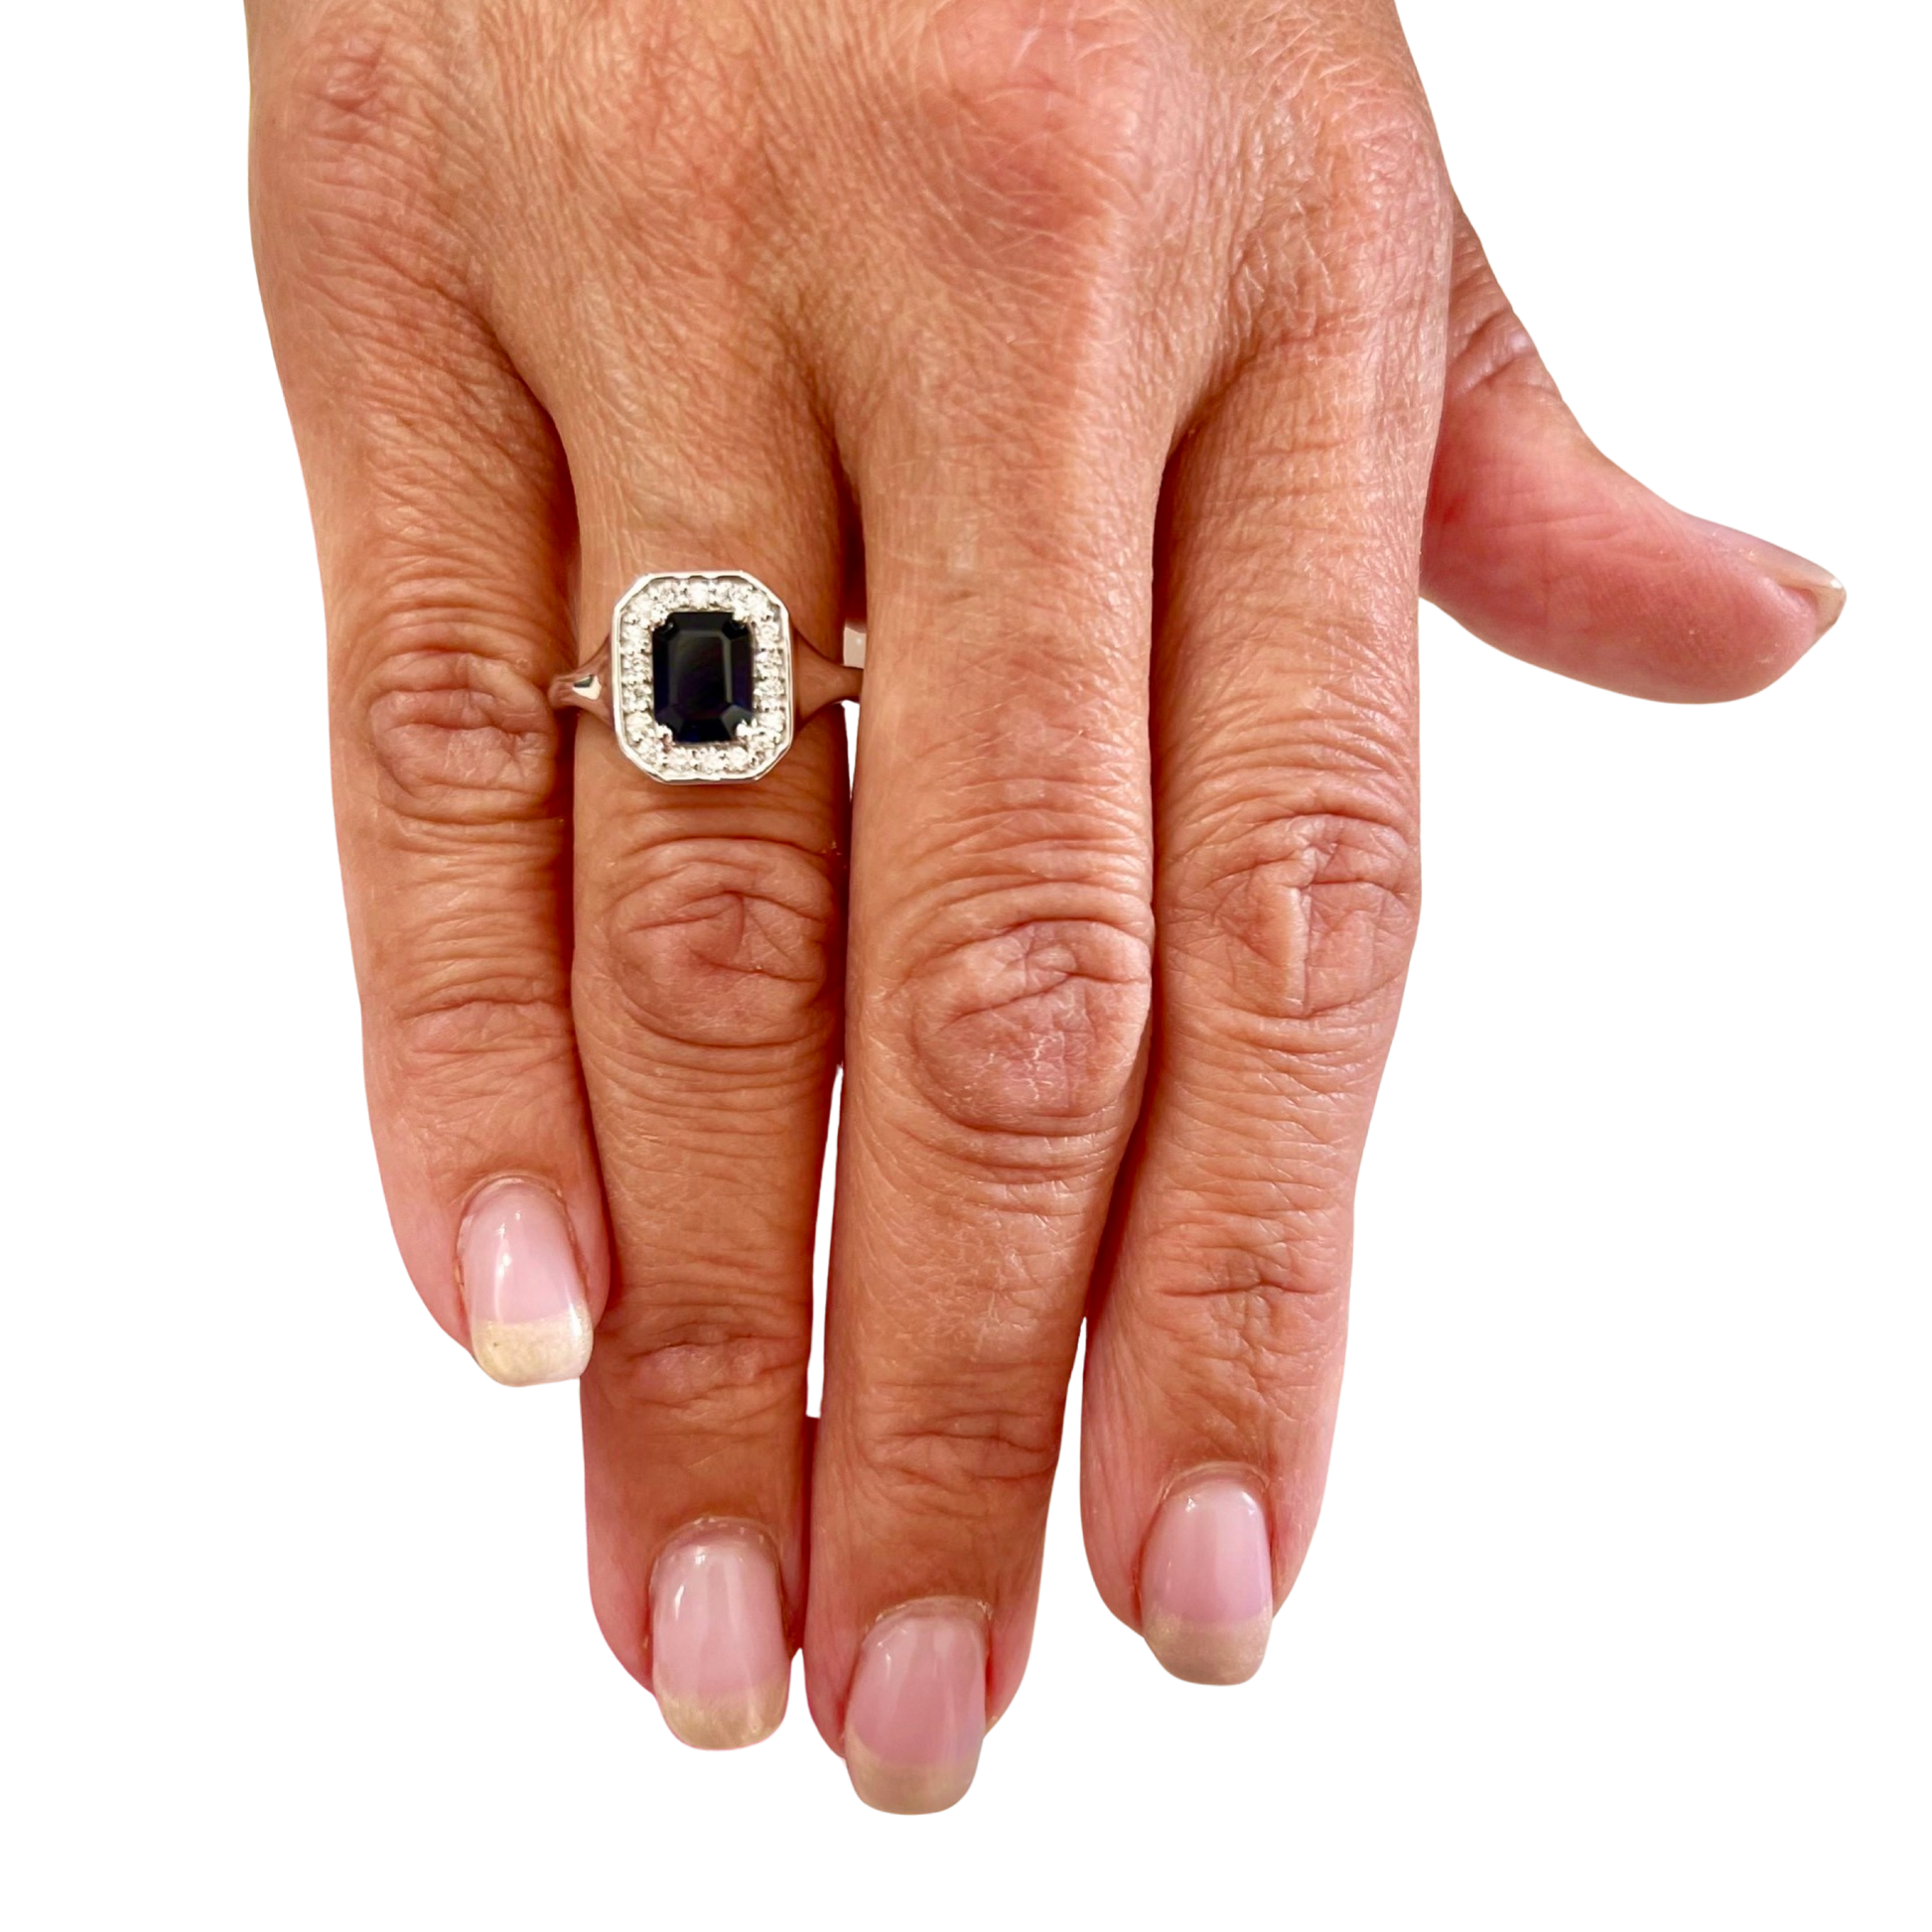 Natural Sapphire Diamond Ring Size 6.25 14k W Gold 1.82 TCW Certified $4,950 216683 - Certified Fine Jewelry